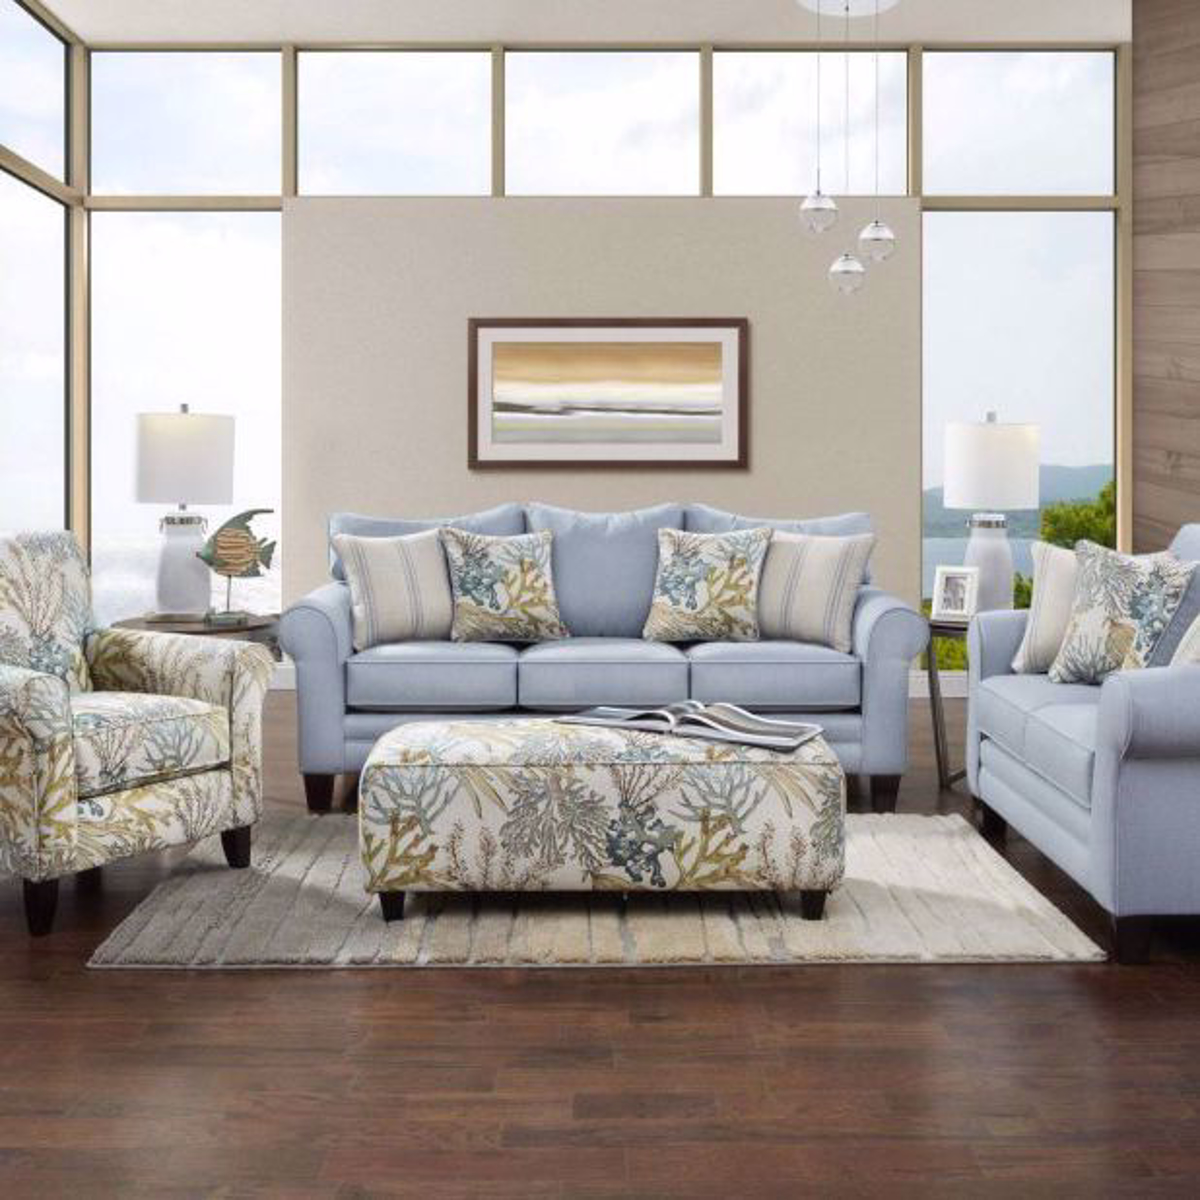 melbourne living room collection | lifestyle furniturebabette's